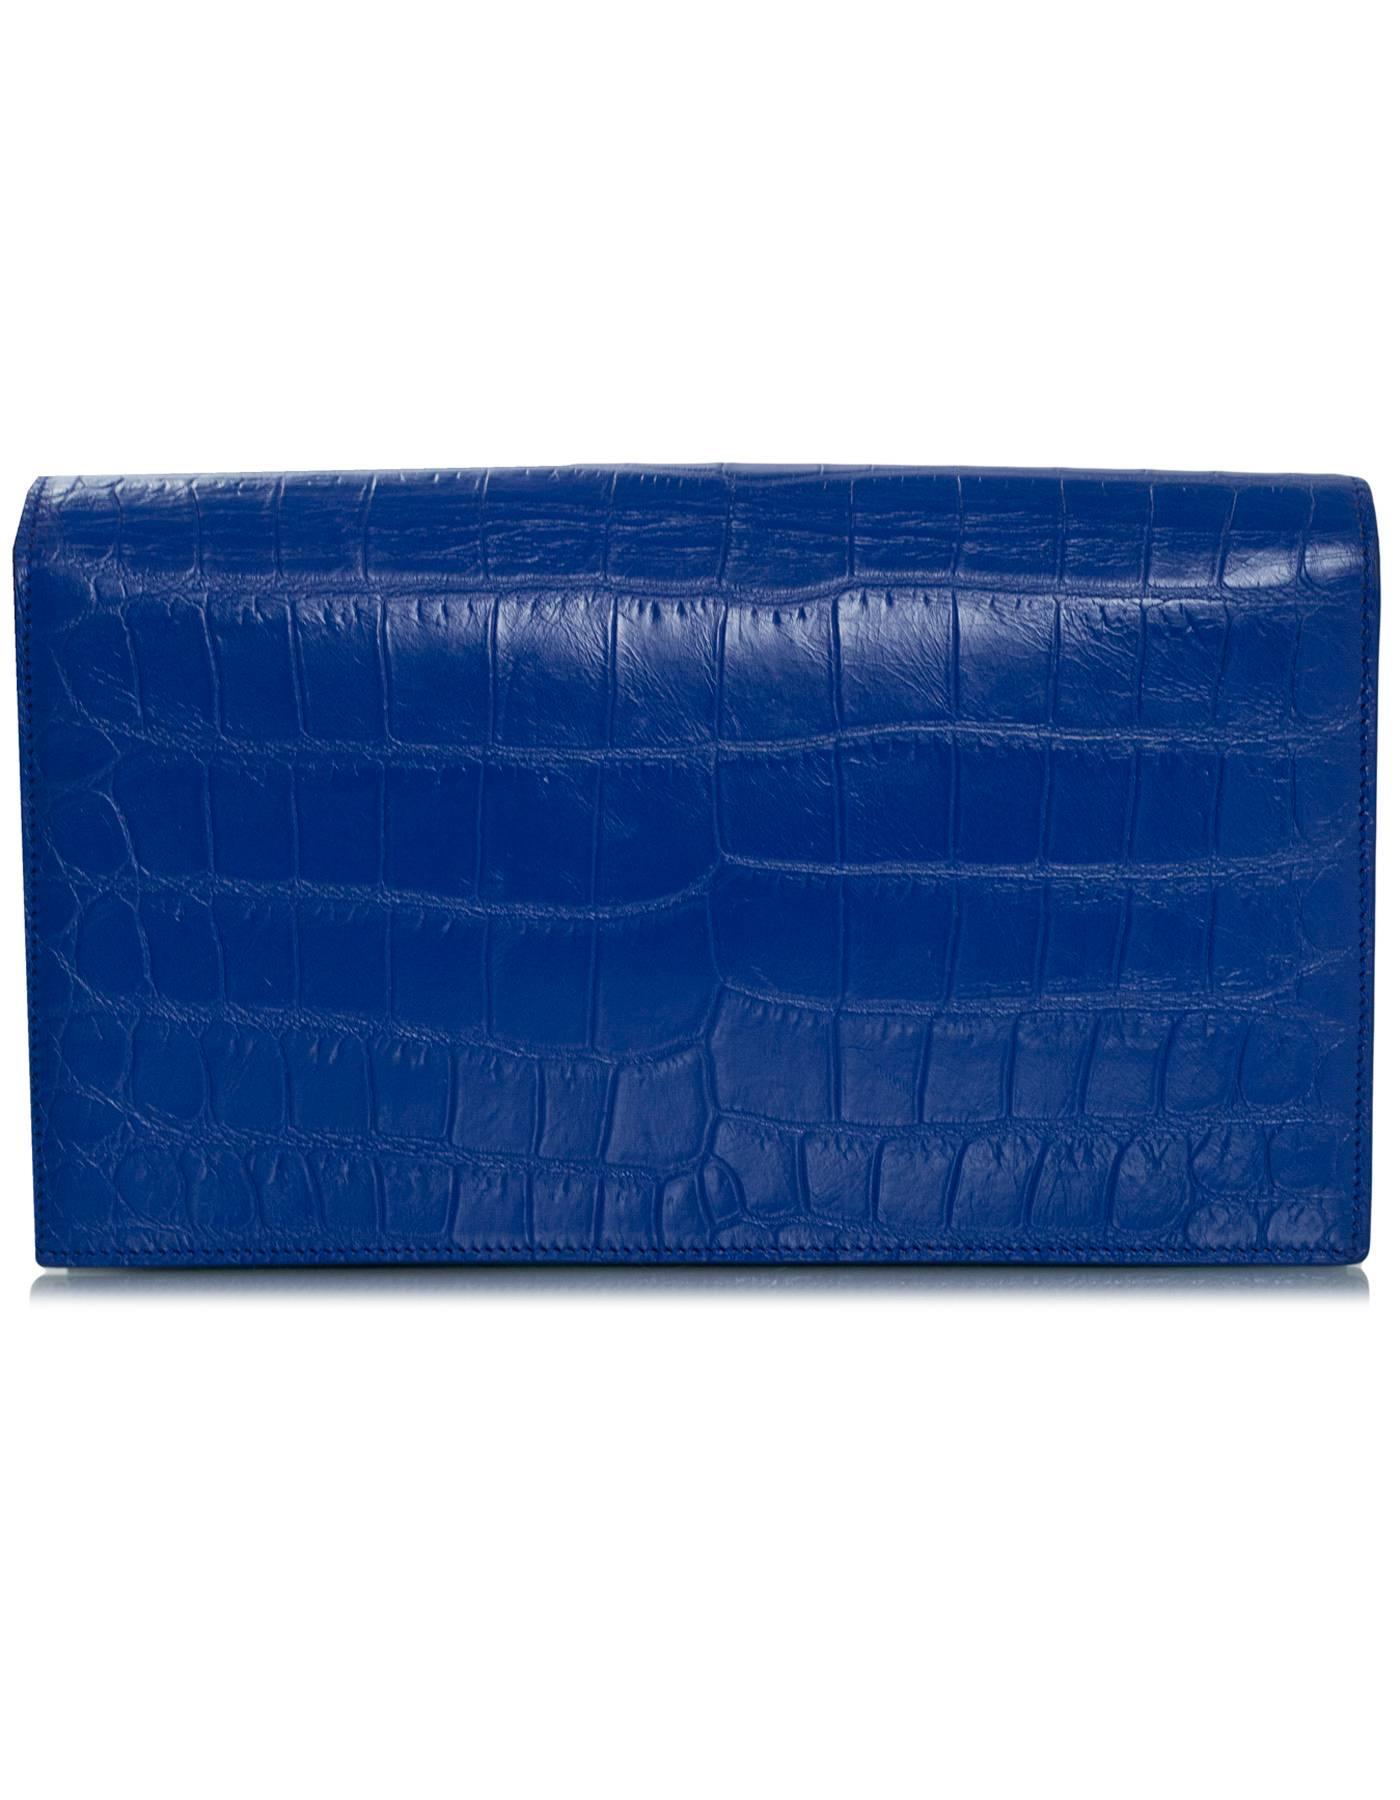 royal blue clutch bag